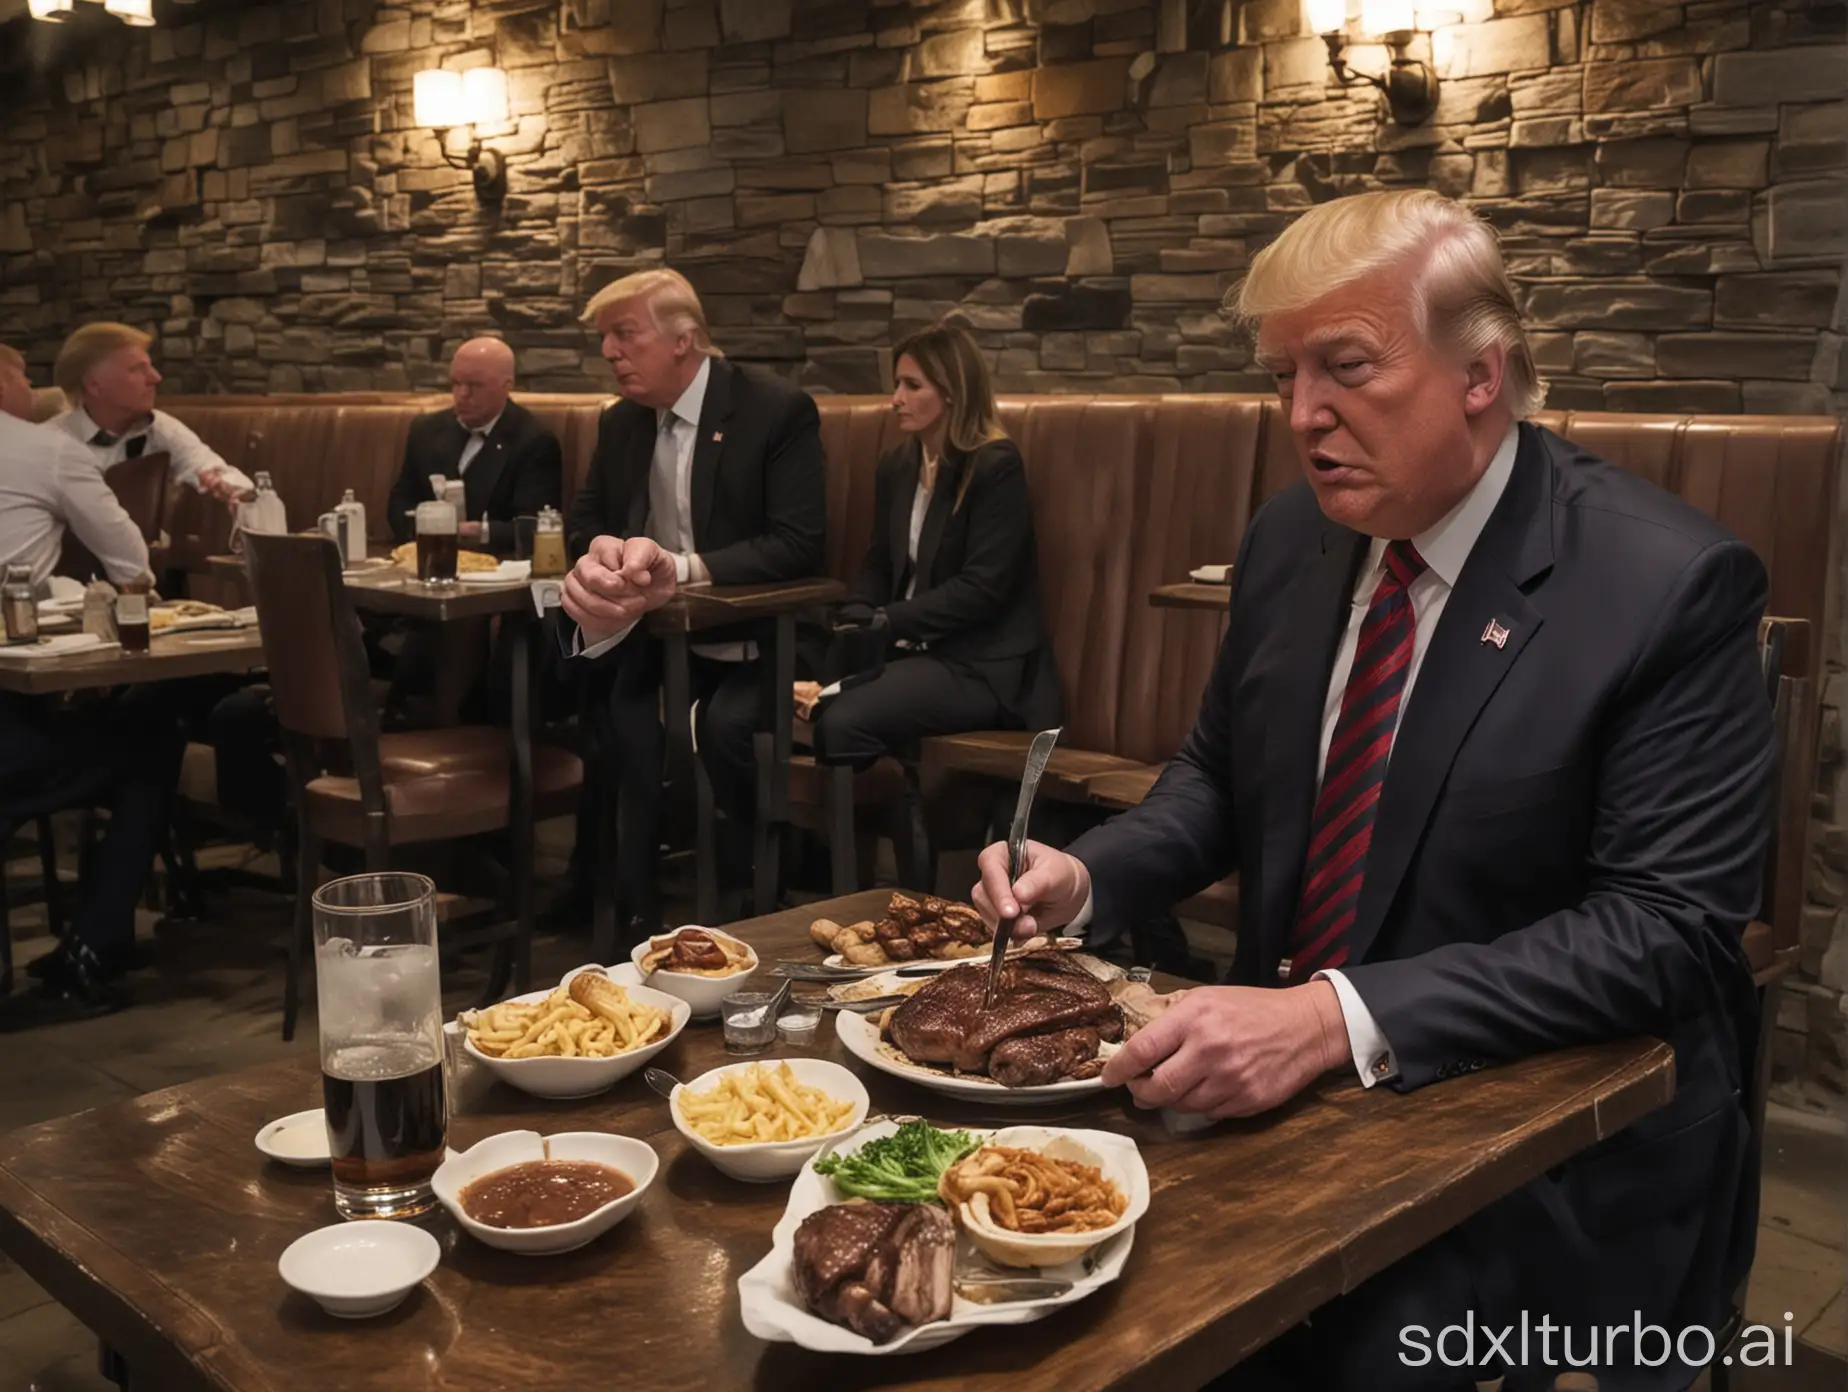 Trump eats barbecue alone in a restaurant